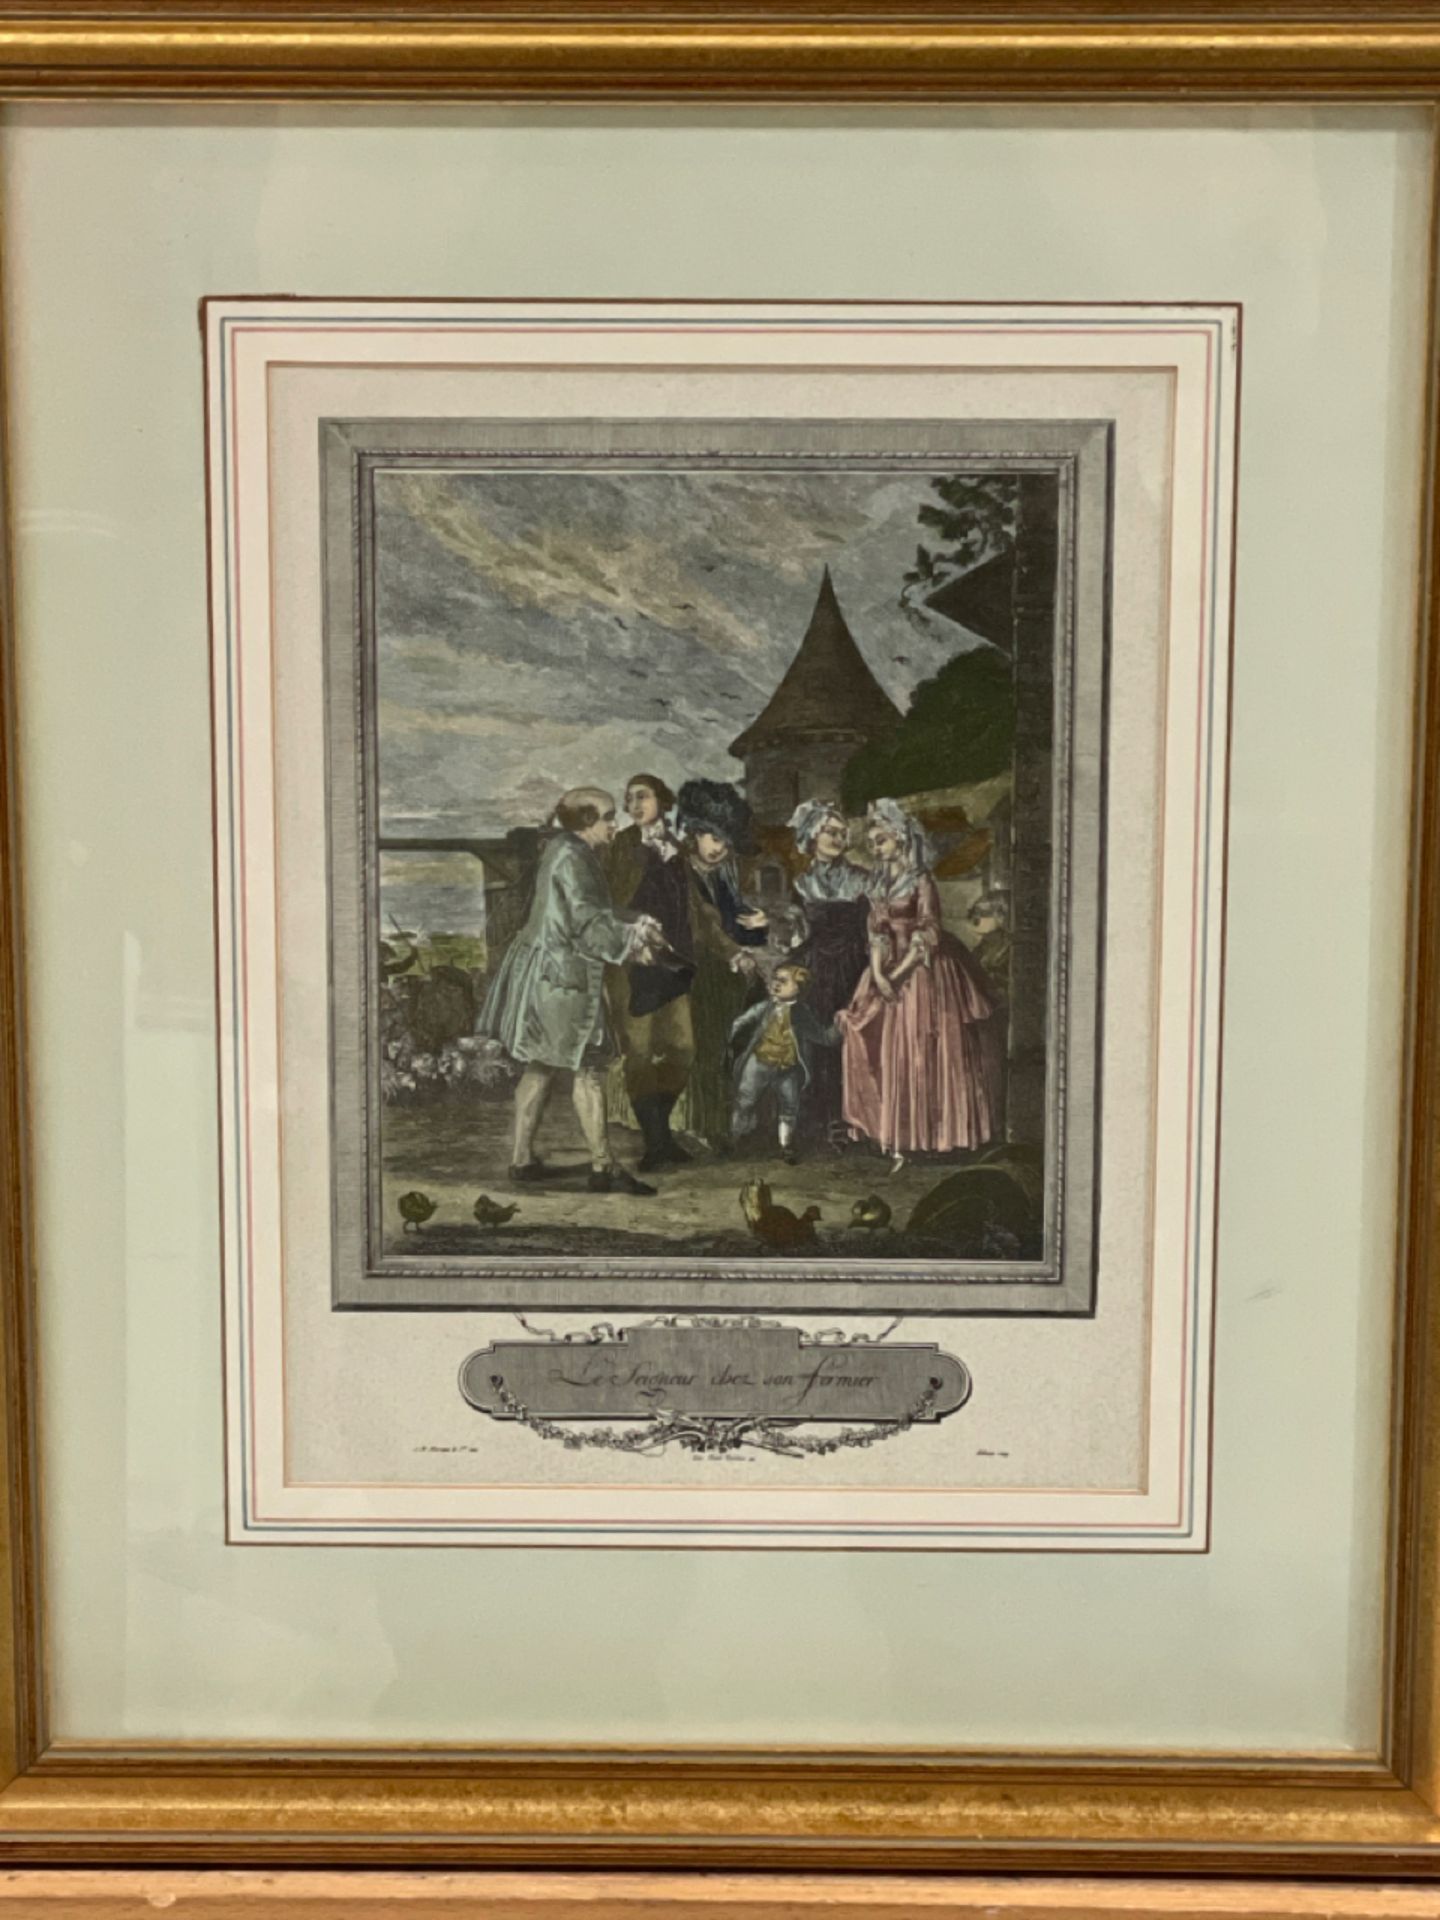 Artwork Print From Claridge's Hotel - Image 2 of 2